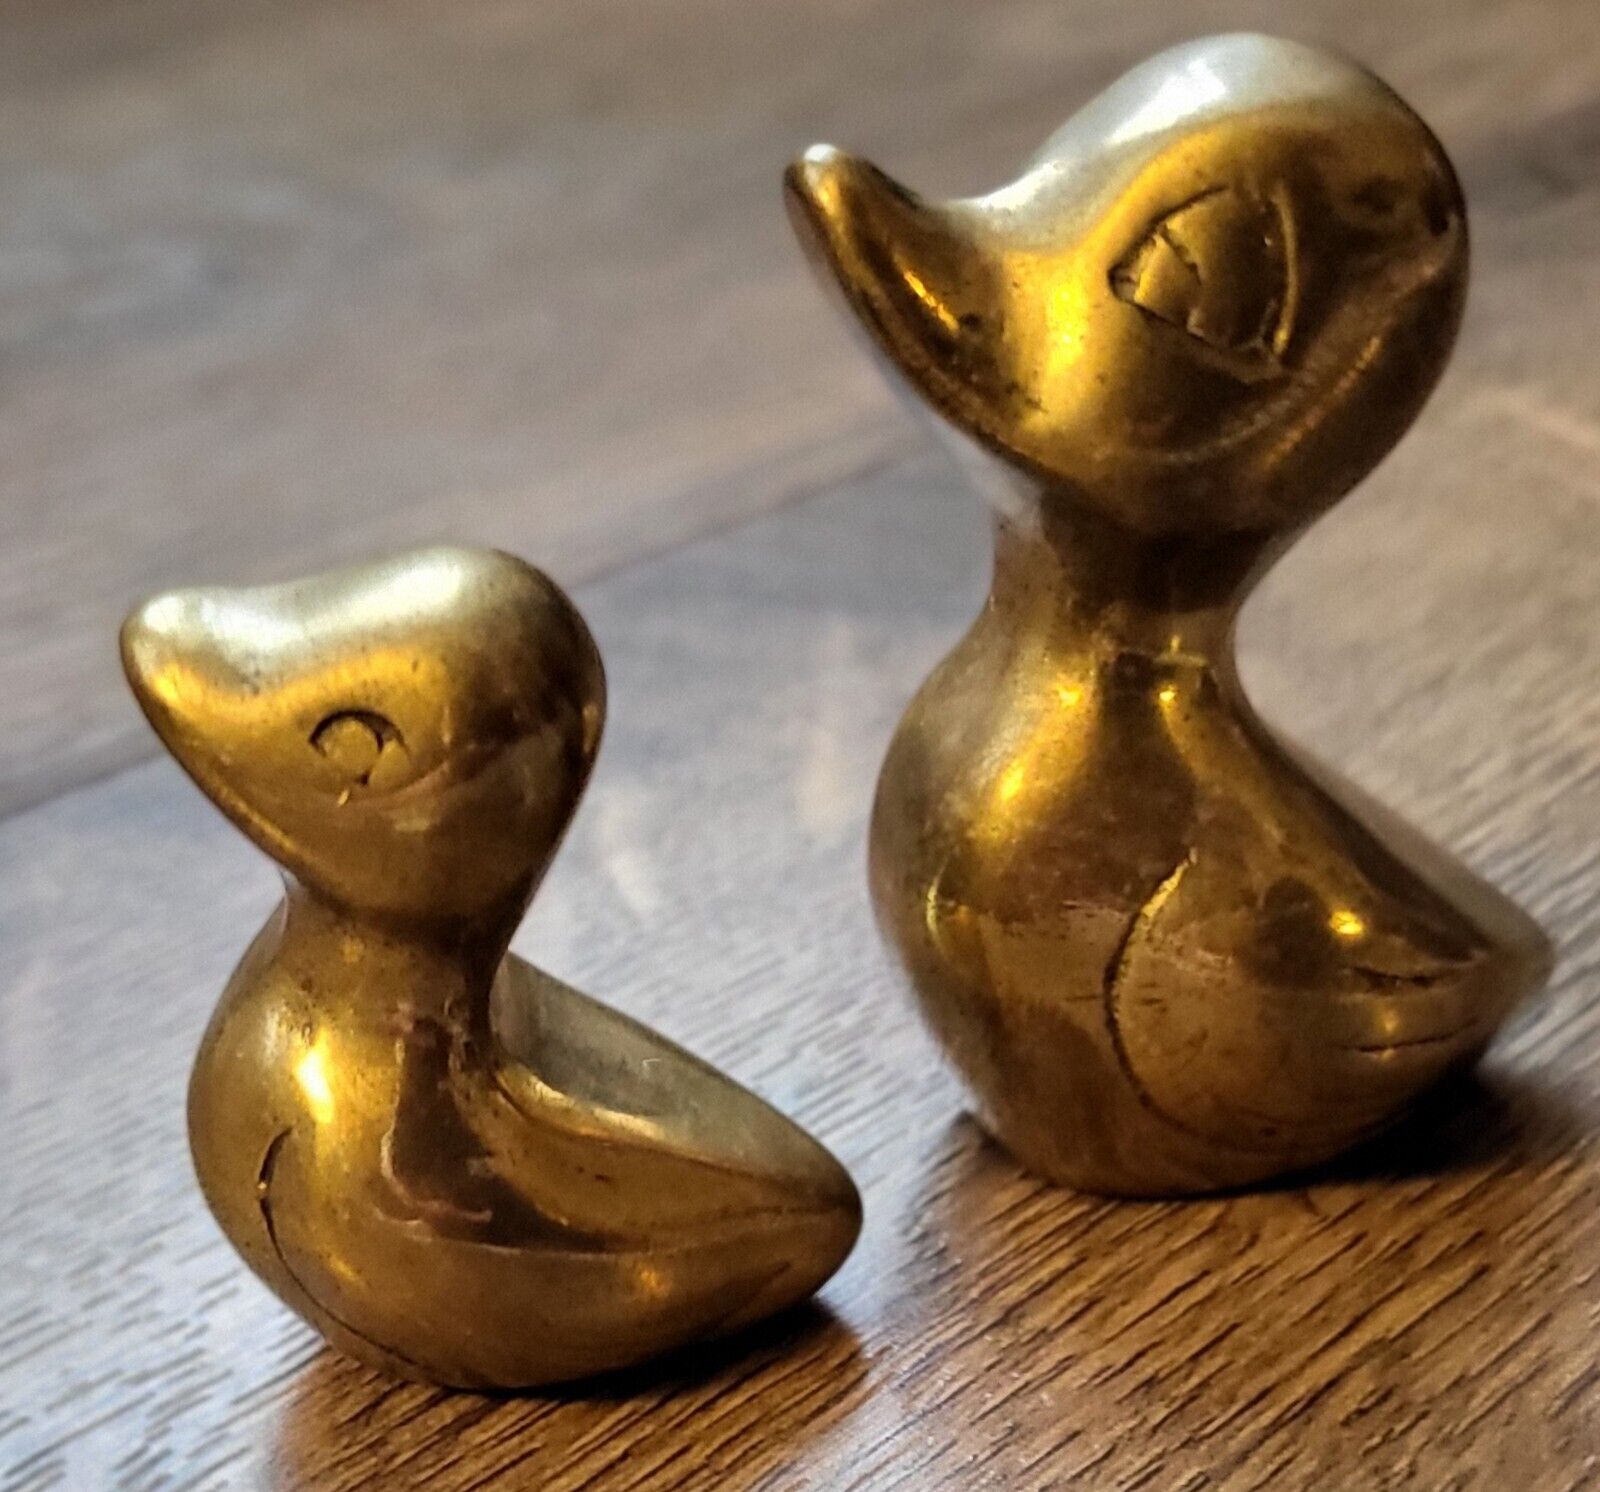 2 Pc. | Solid Brass | Duck & Duckling Pair | 2” & 1.5” Figurines | Vintage